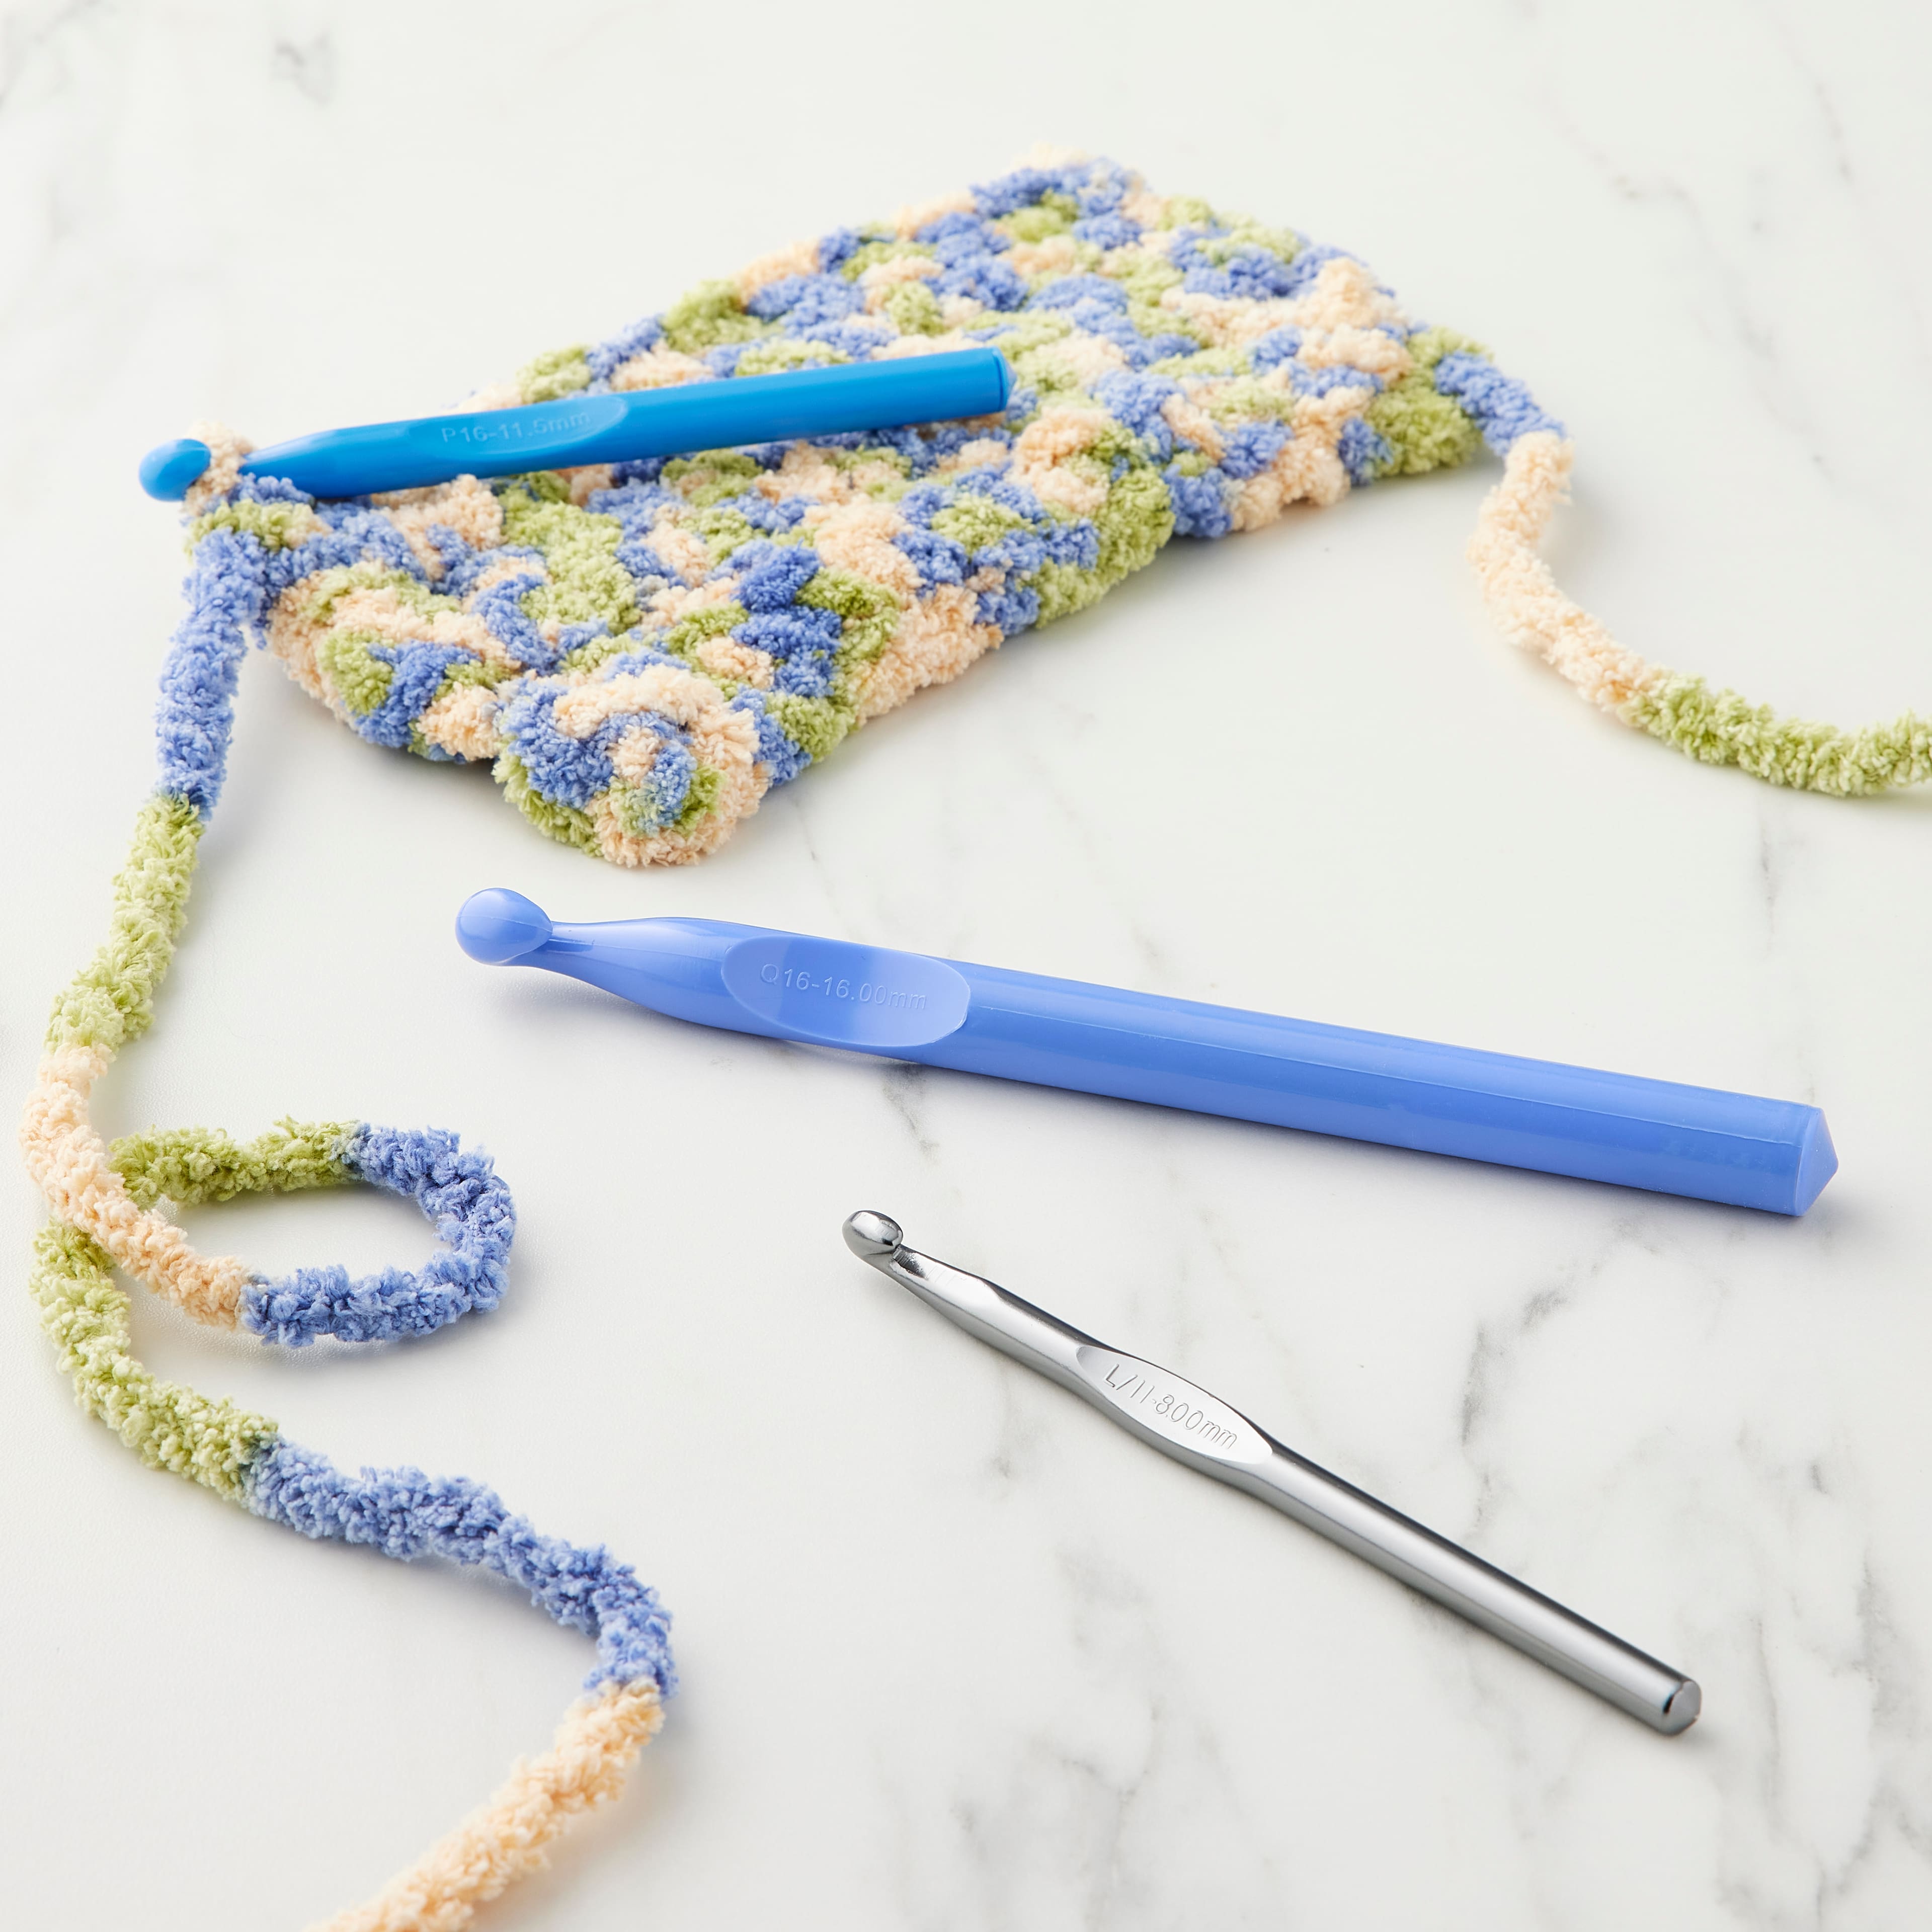 Loops & Threads 8-11.5mm Plastic Crochet Hook Set - Each